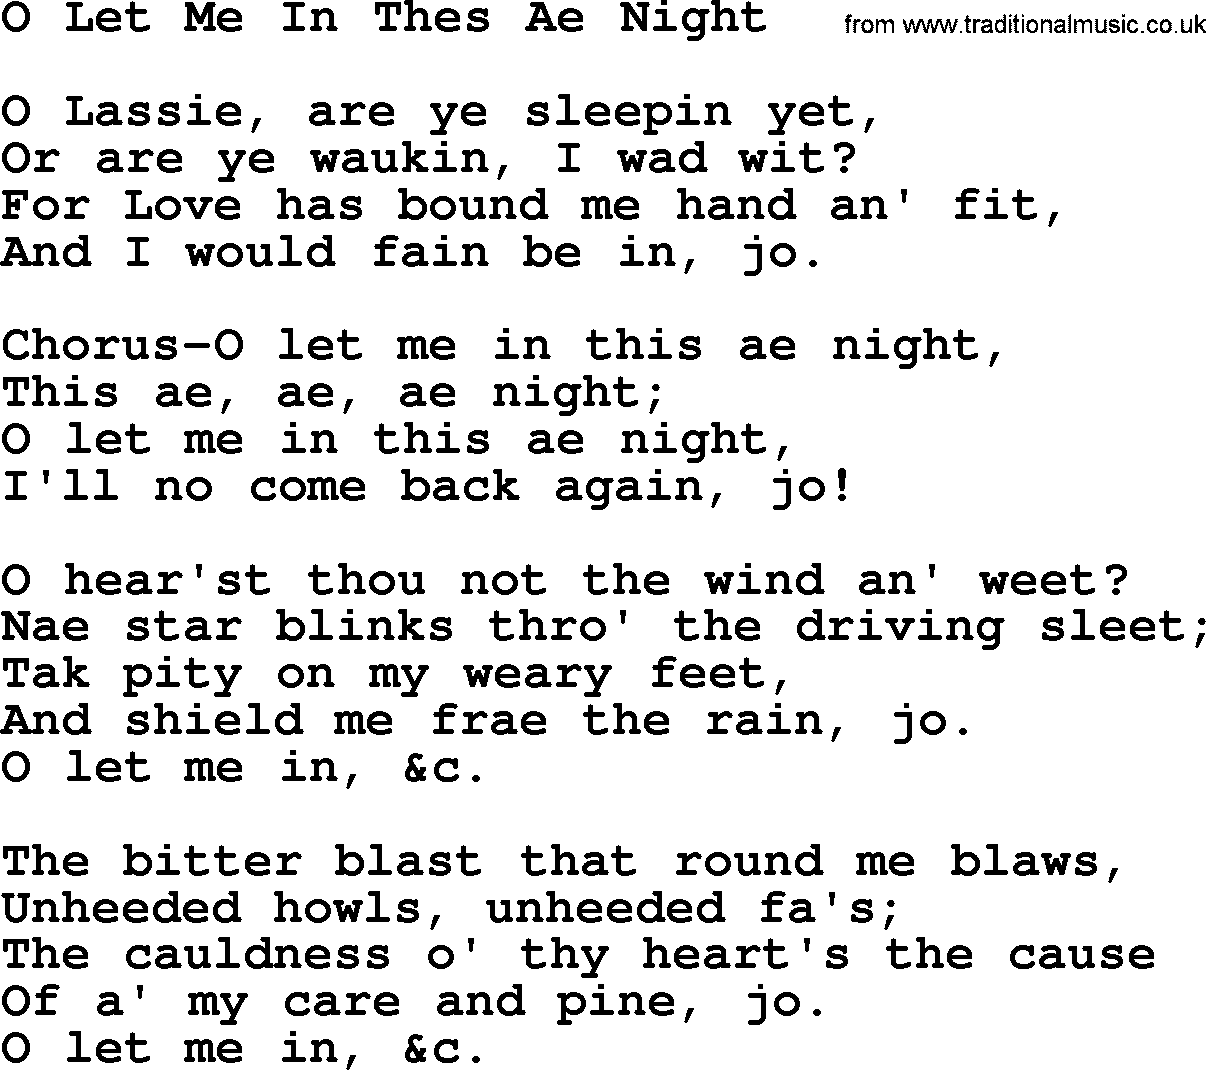 Robert Burns Songs & Lyrics: O Let Me In Thes Ae Night